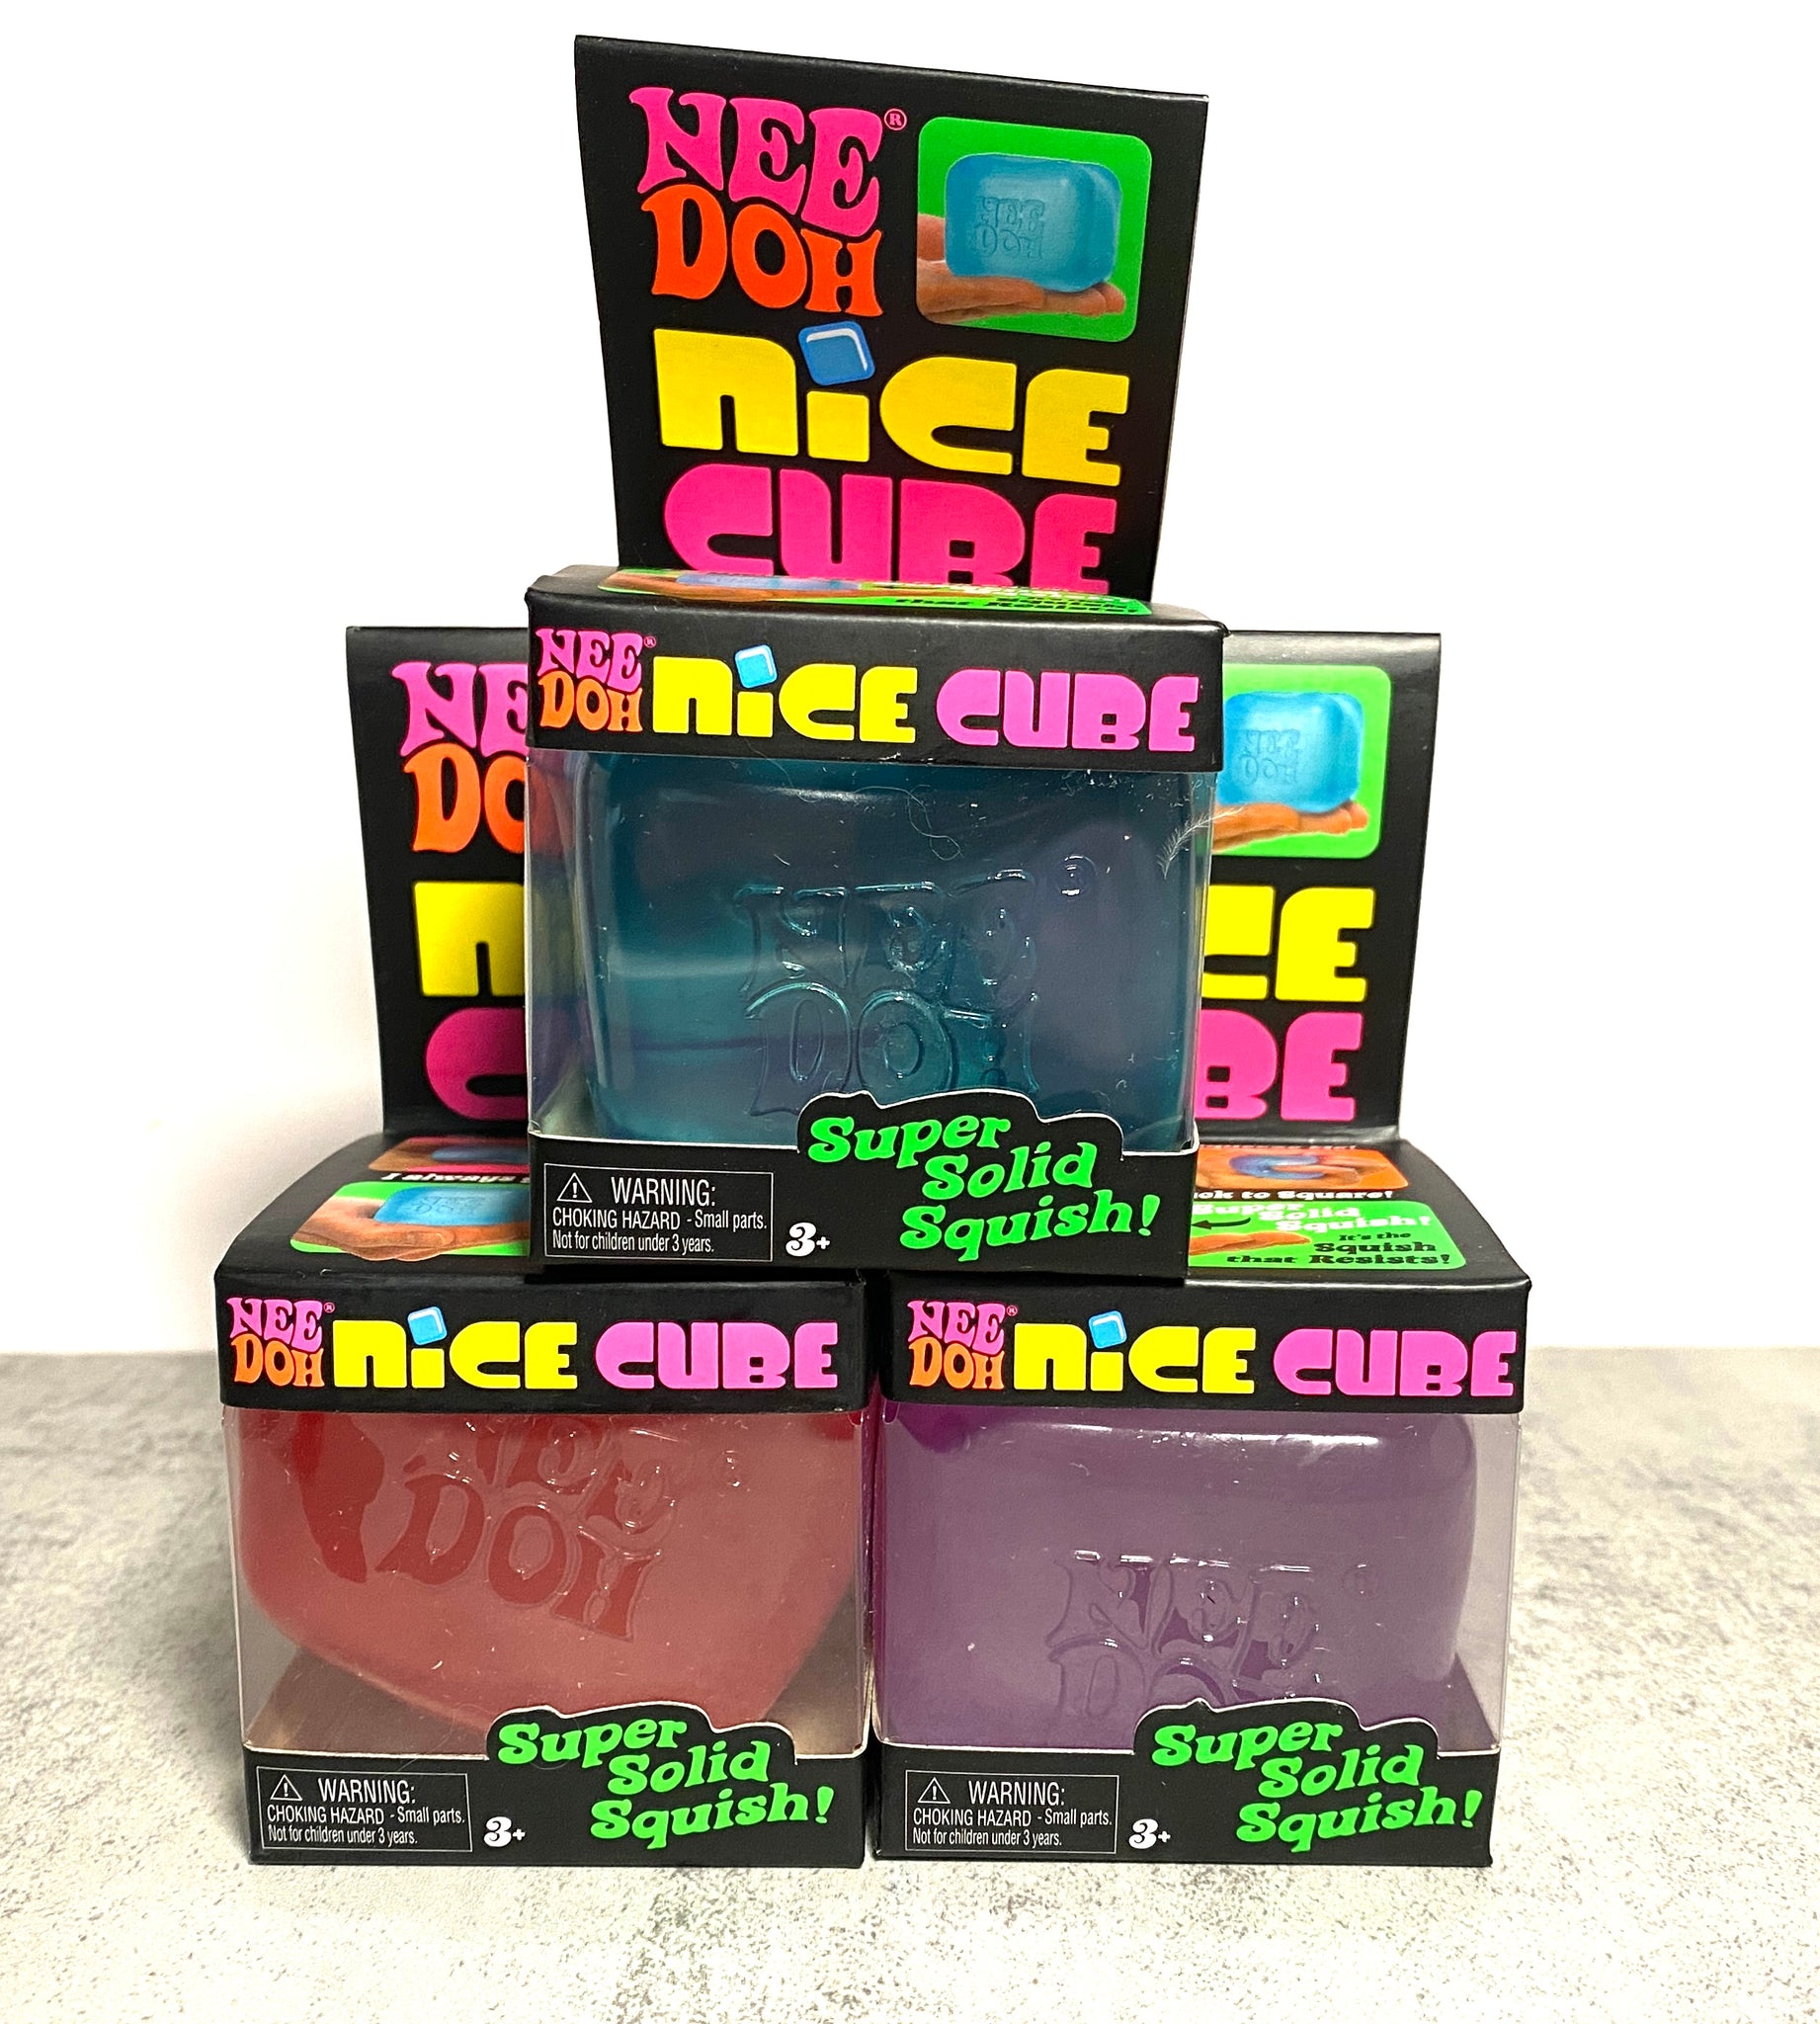 The VIRAL Needoh Nice Cube 